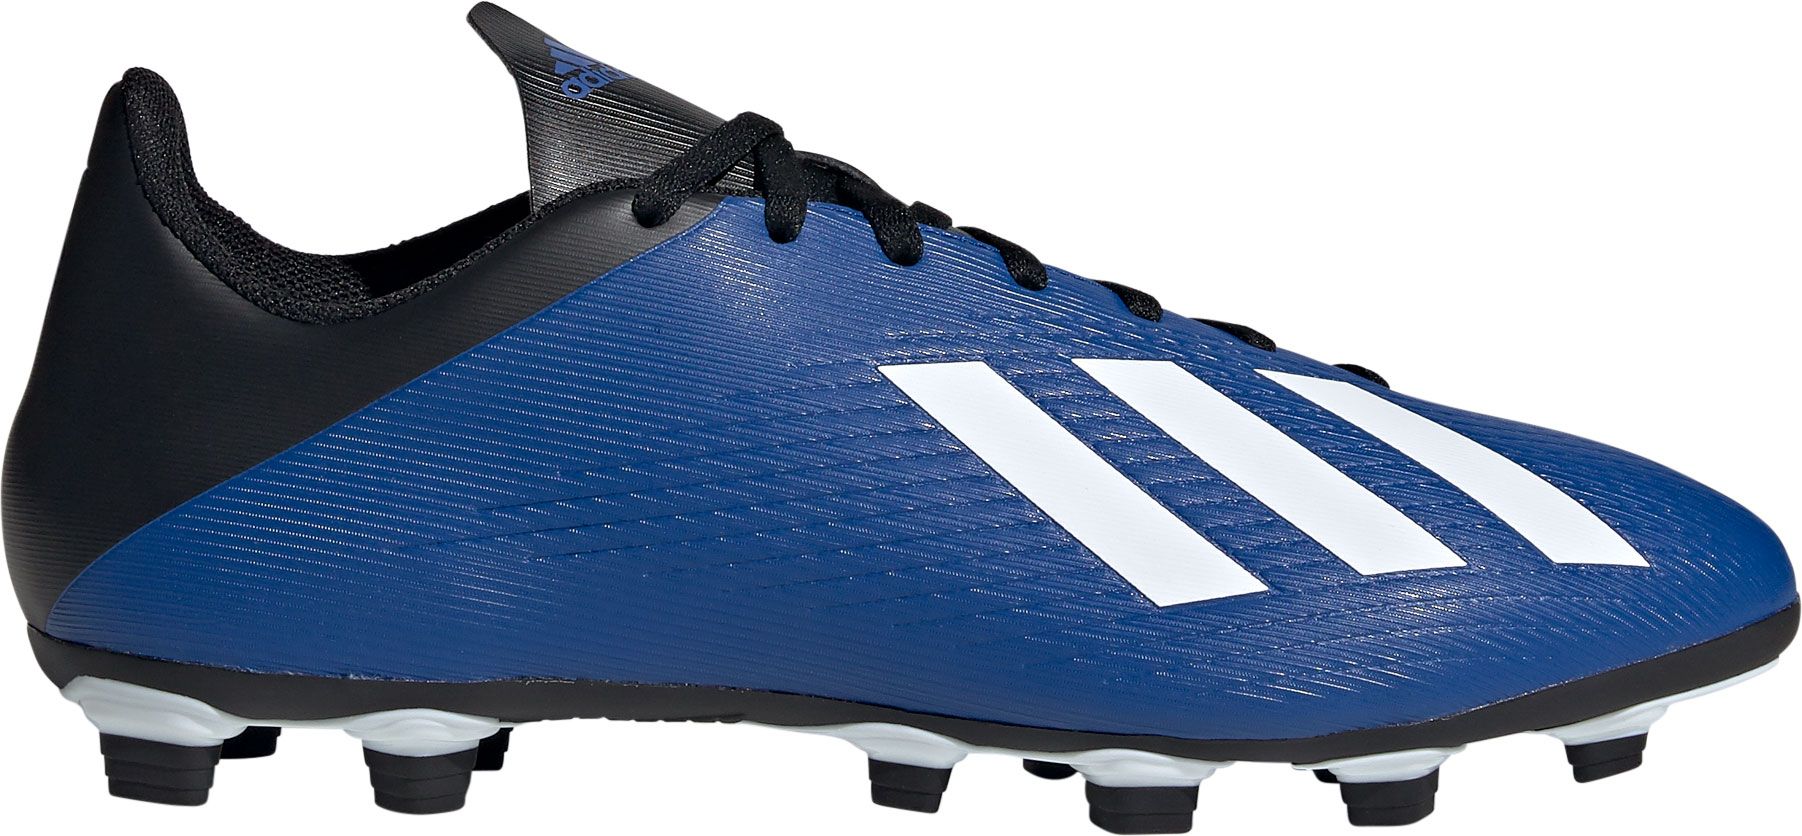 adidas men's x 19.4 fxg soccer cleats